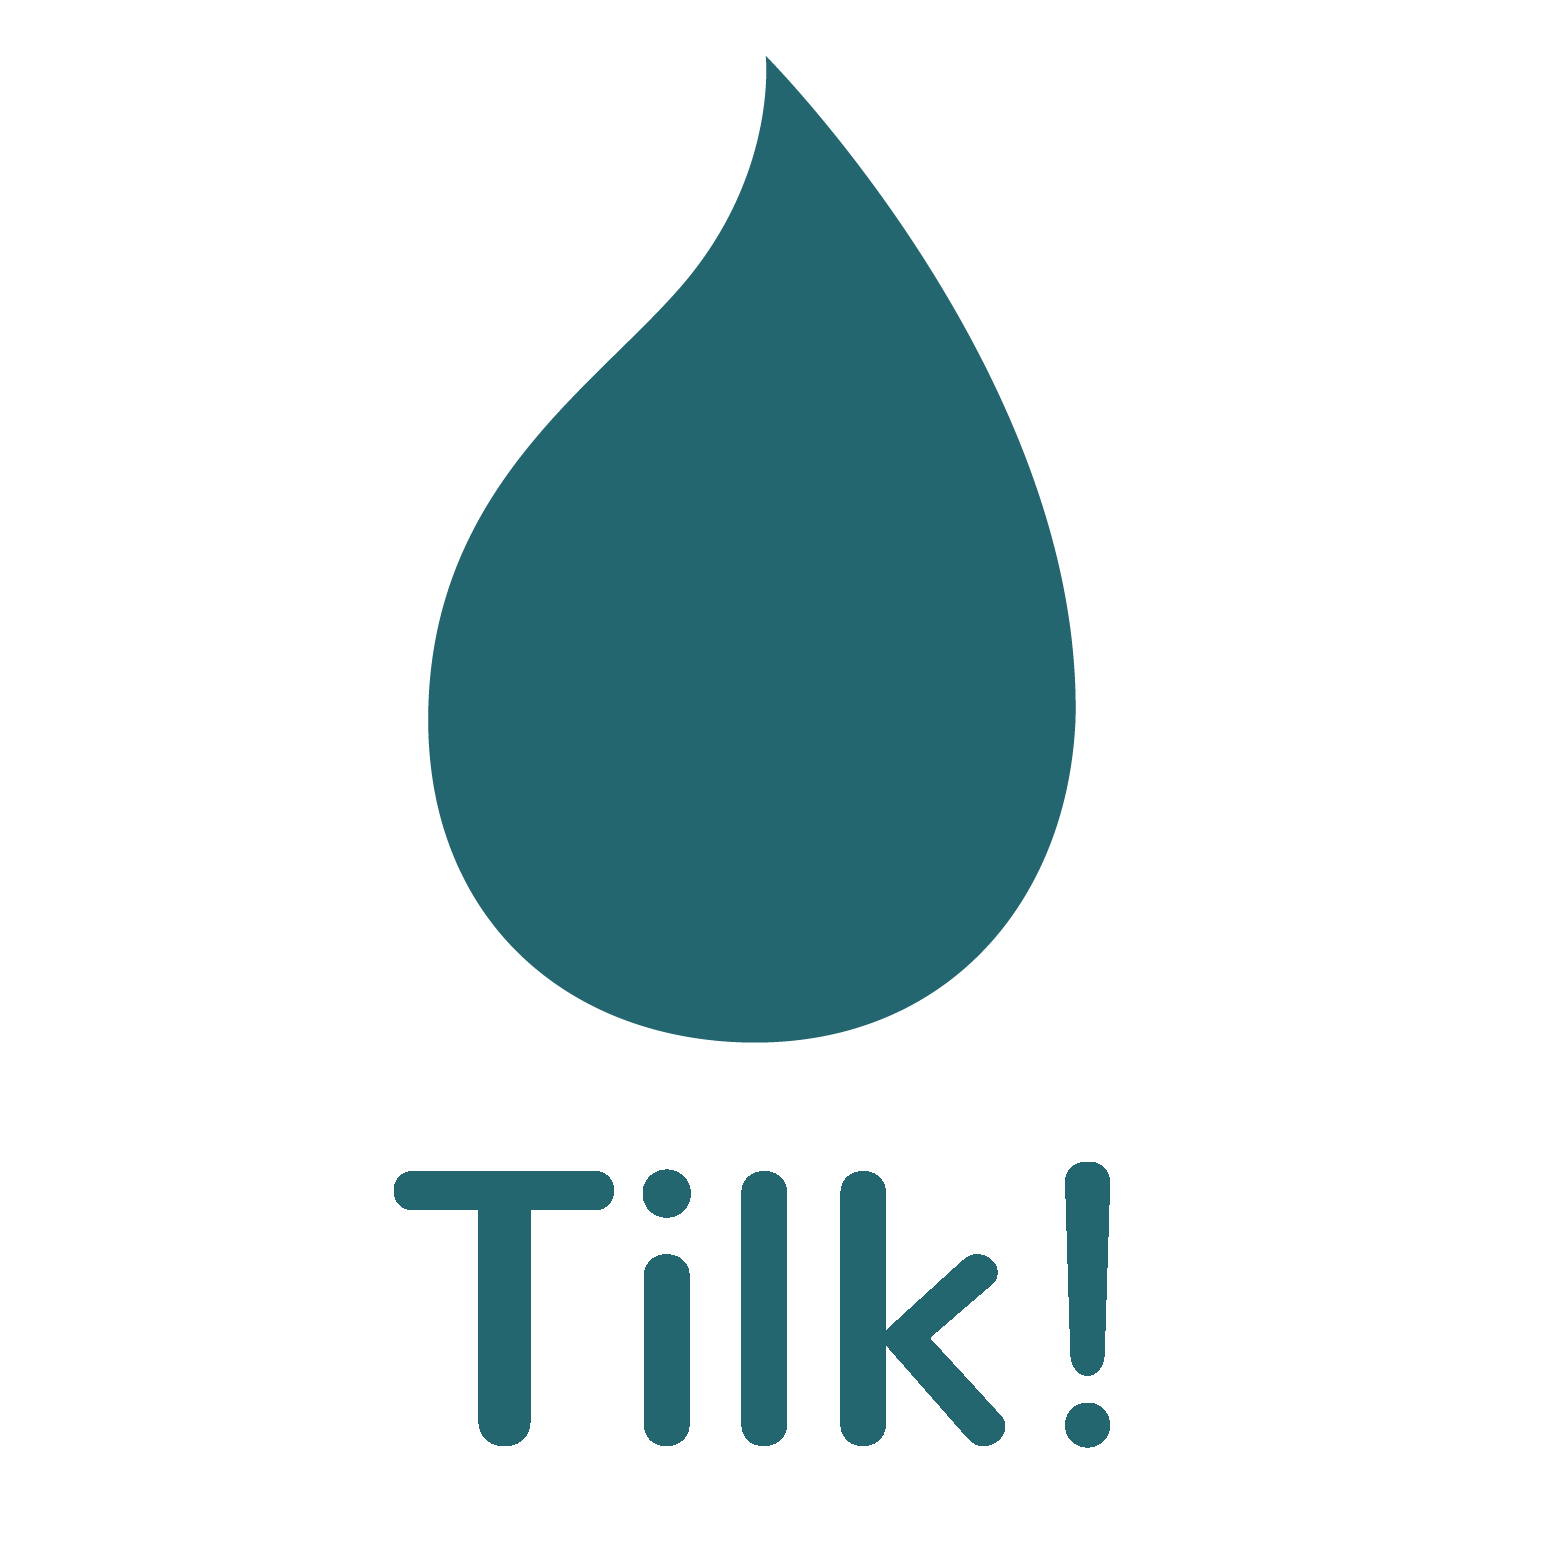 Skin Cream Logo - Tilk! natural skincare - Tilk! bioactive skincare products